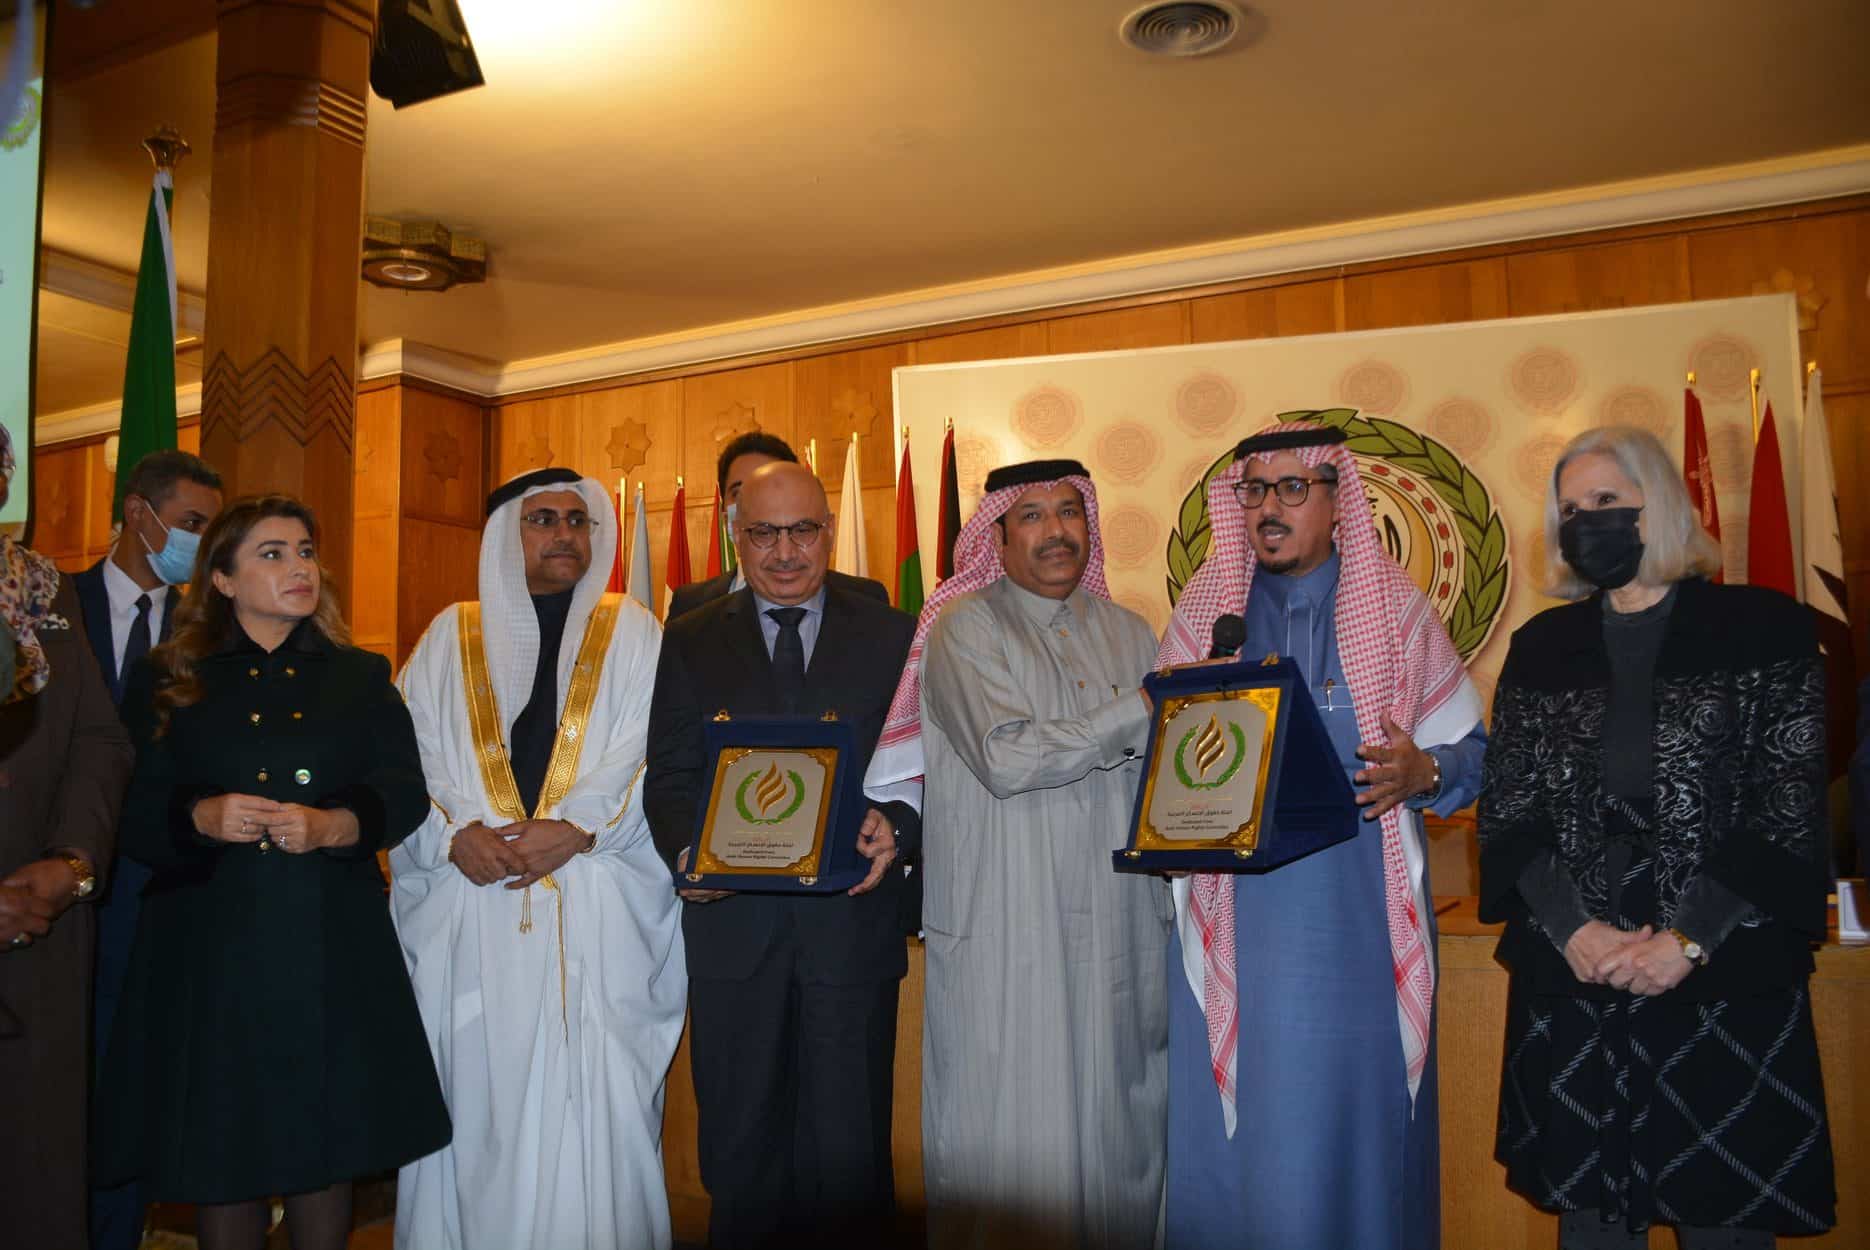 Arab League’s Human Rights Committee honors members of the Saudi Shoura Council